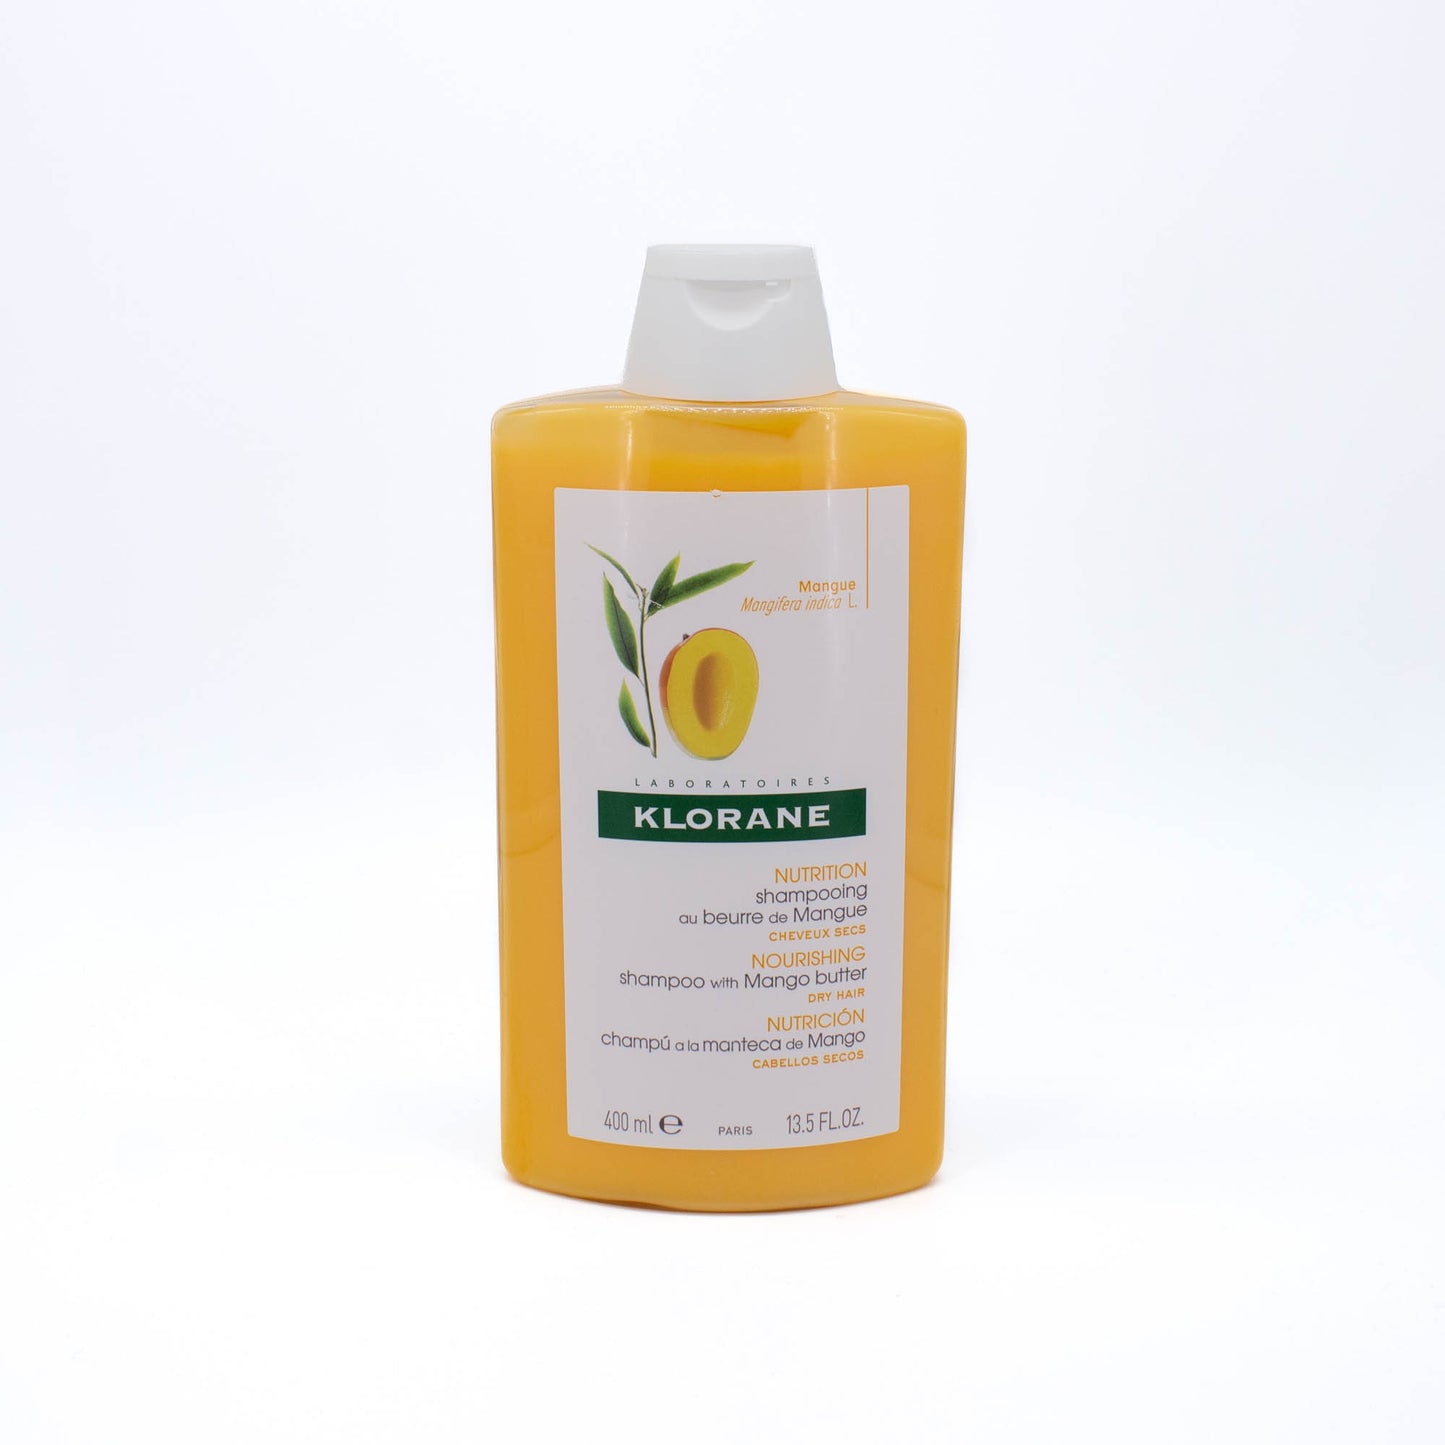 KLORANE Nourishing Shampoo with Mango Butter 13.5oz - Small Amount Missing